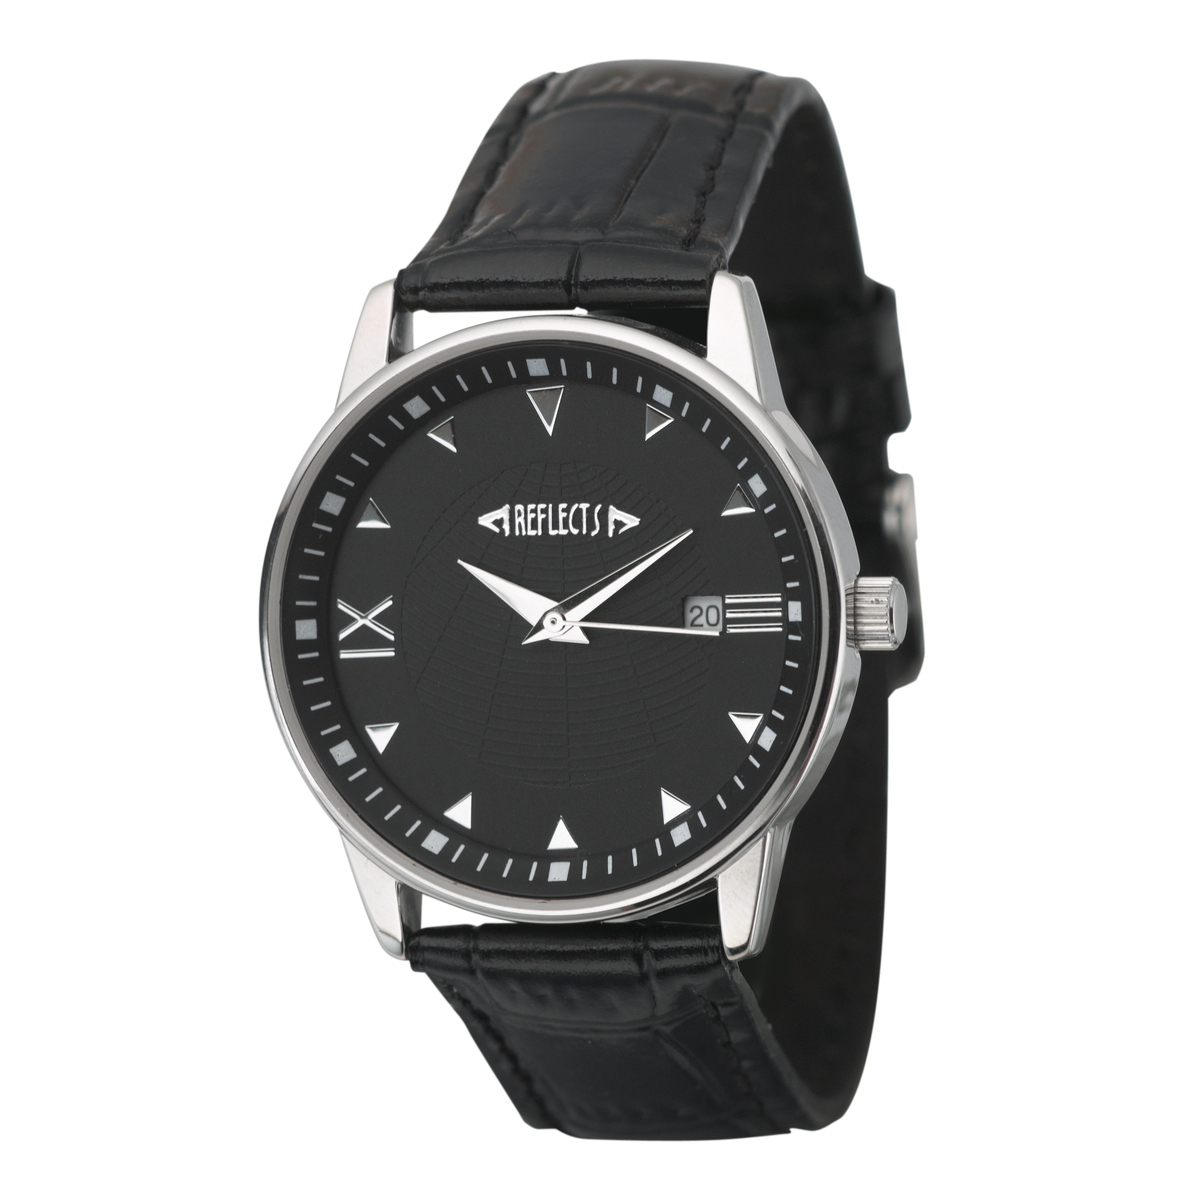 LM Armbanduhr REFLECTS-CLASSIC schwarz, silber